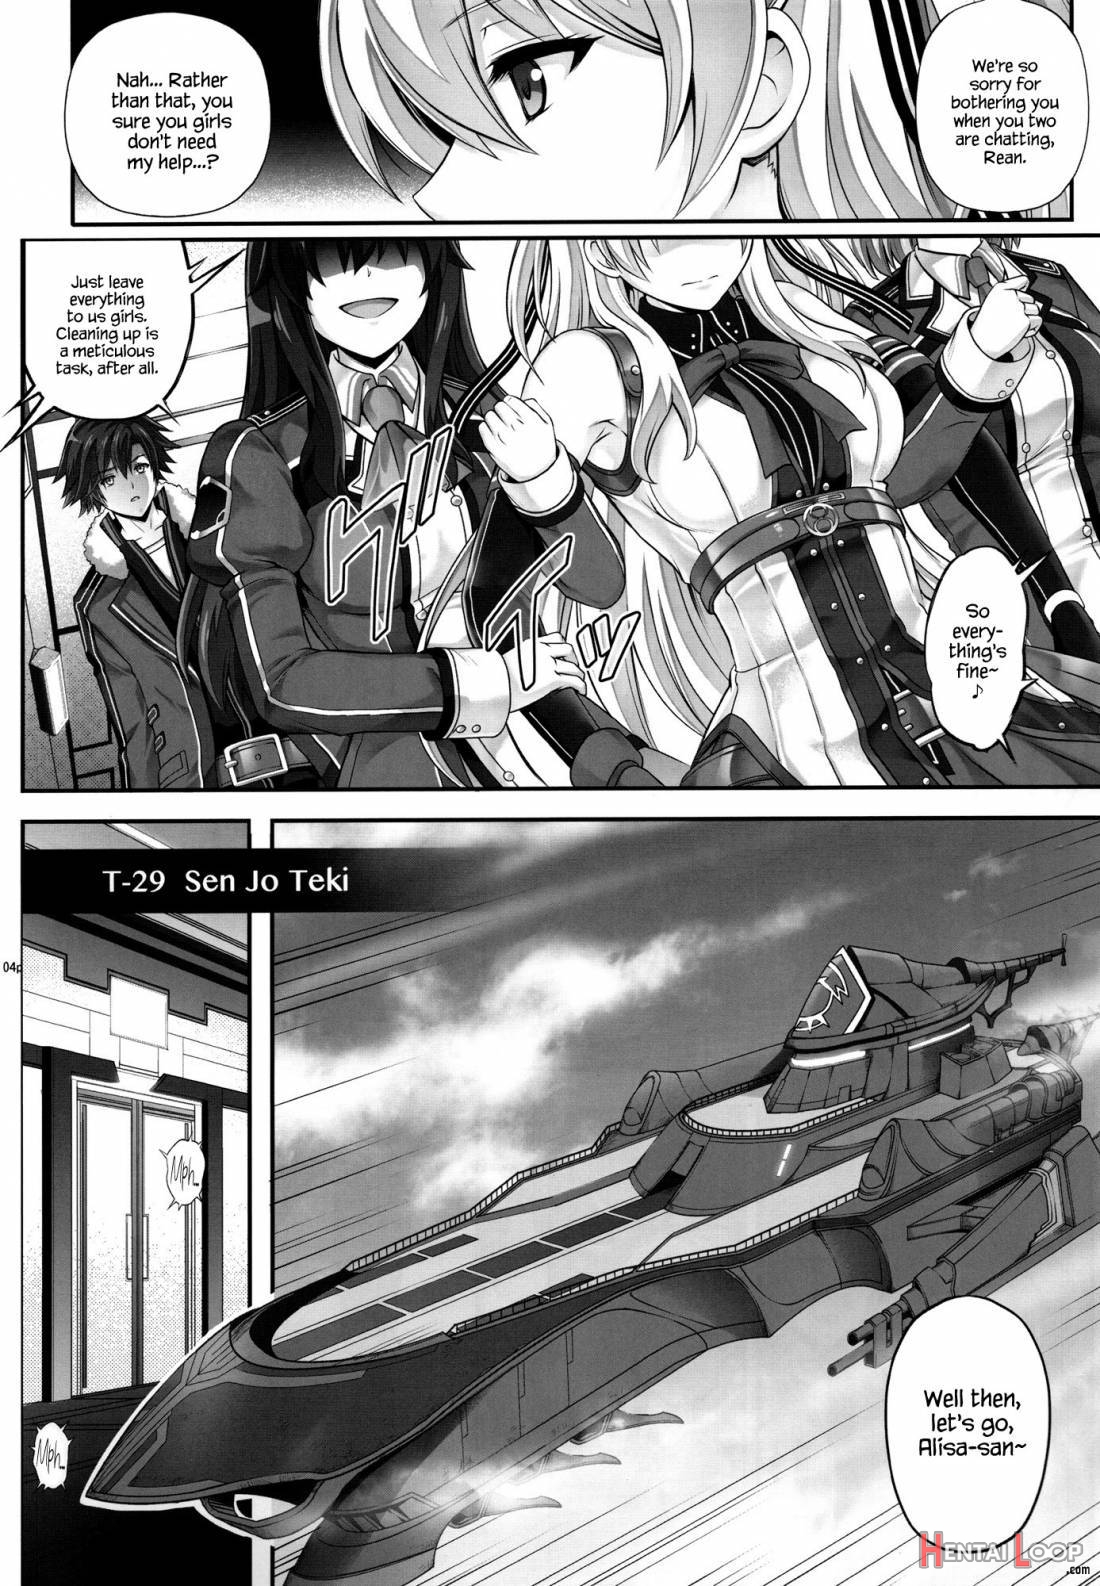 T-29 Senjoteki page 3